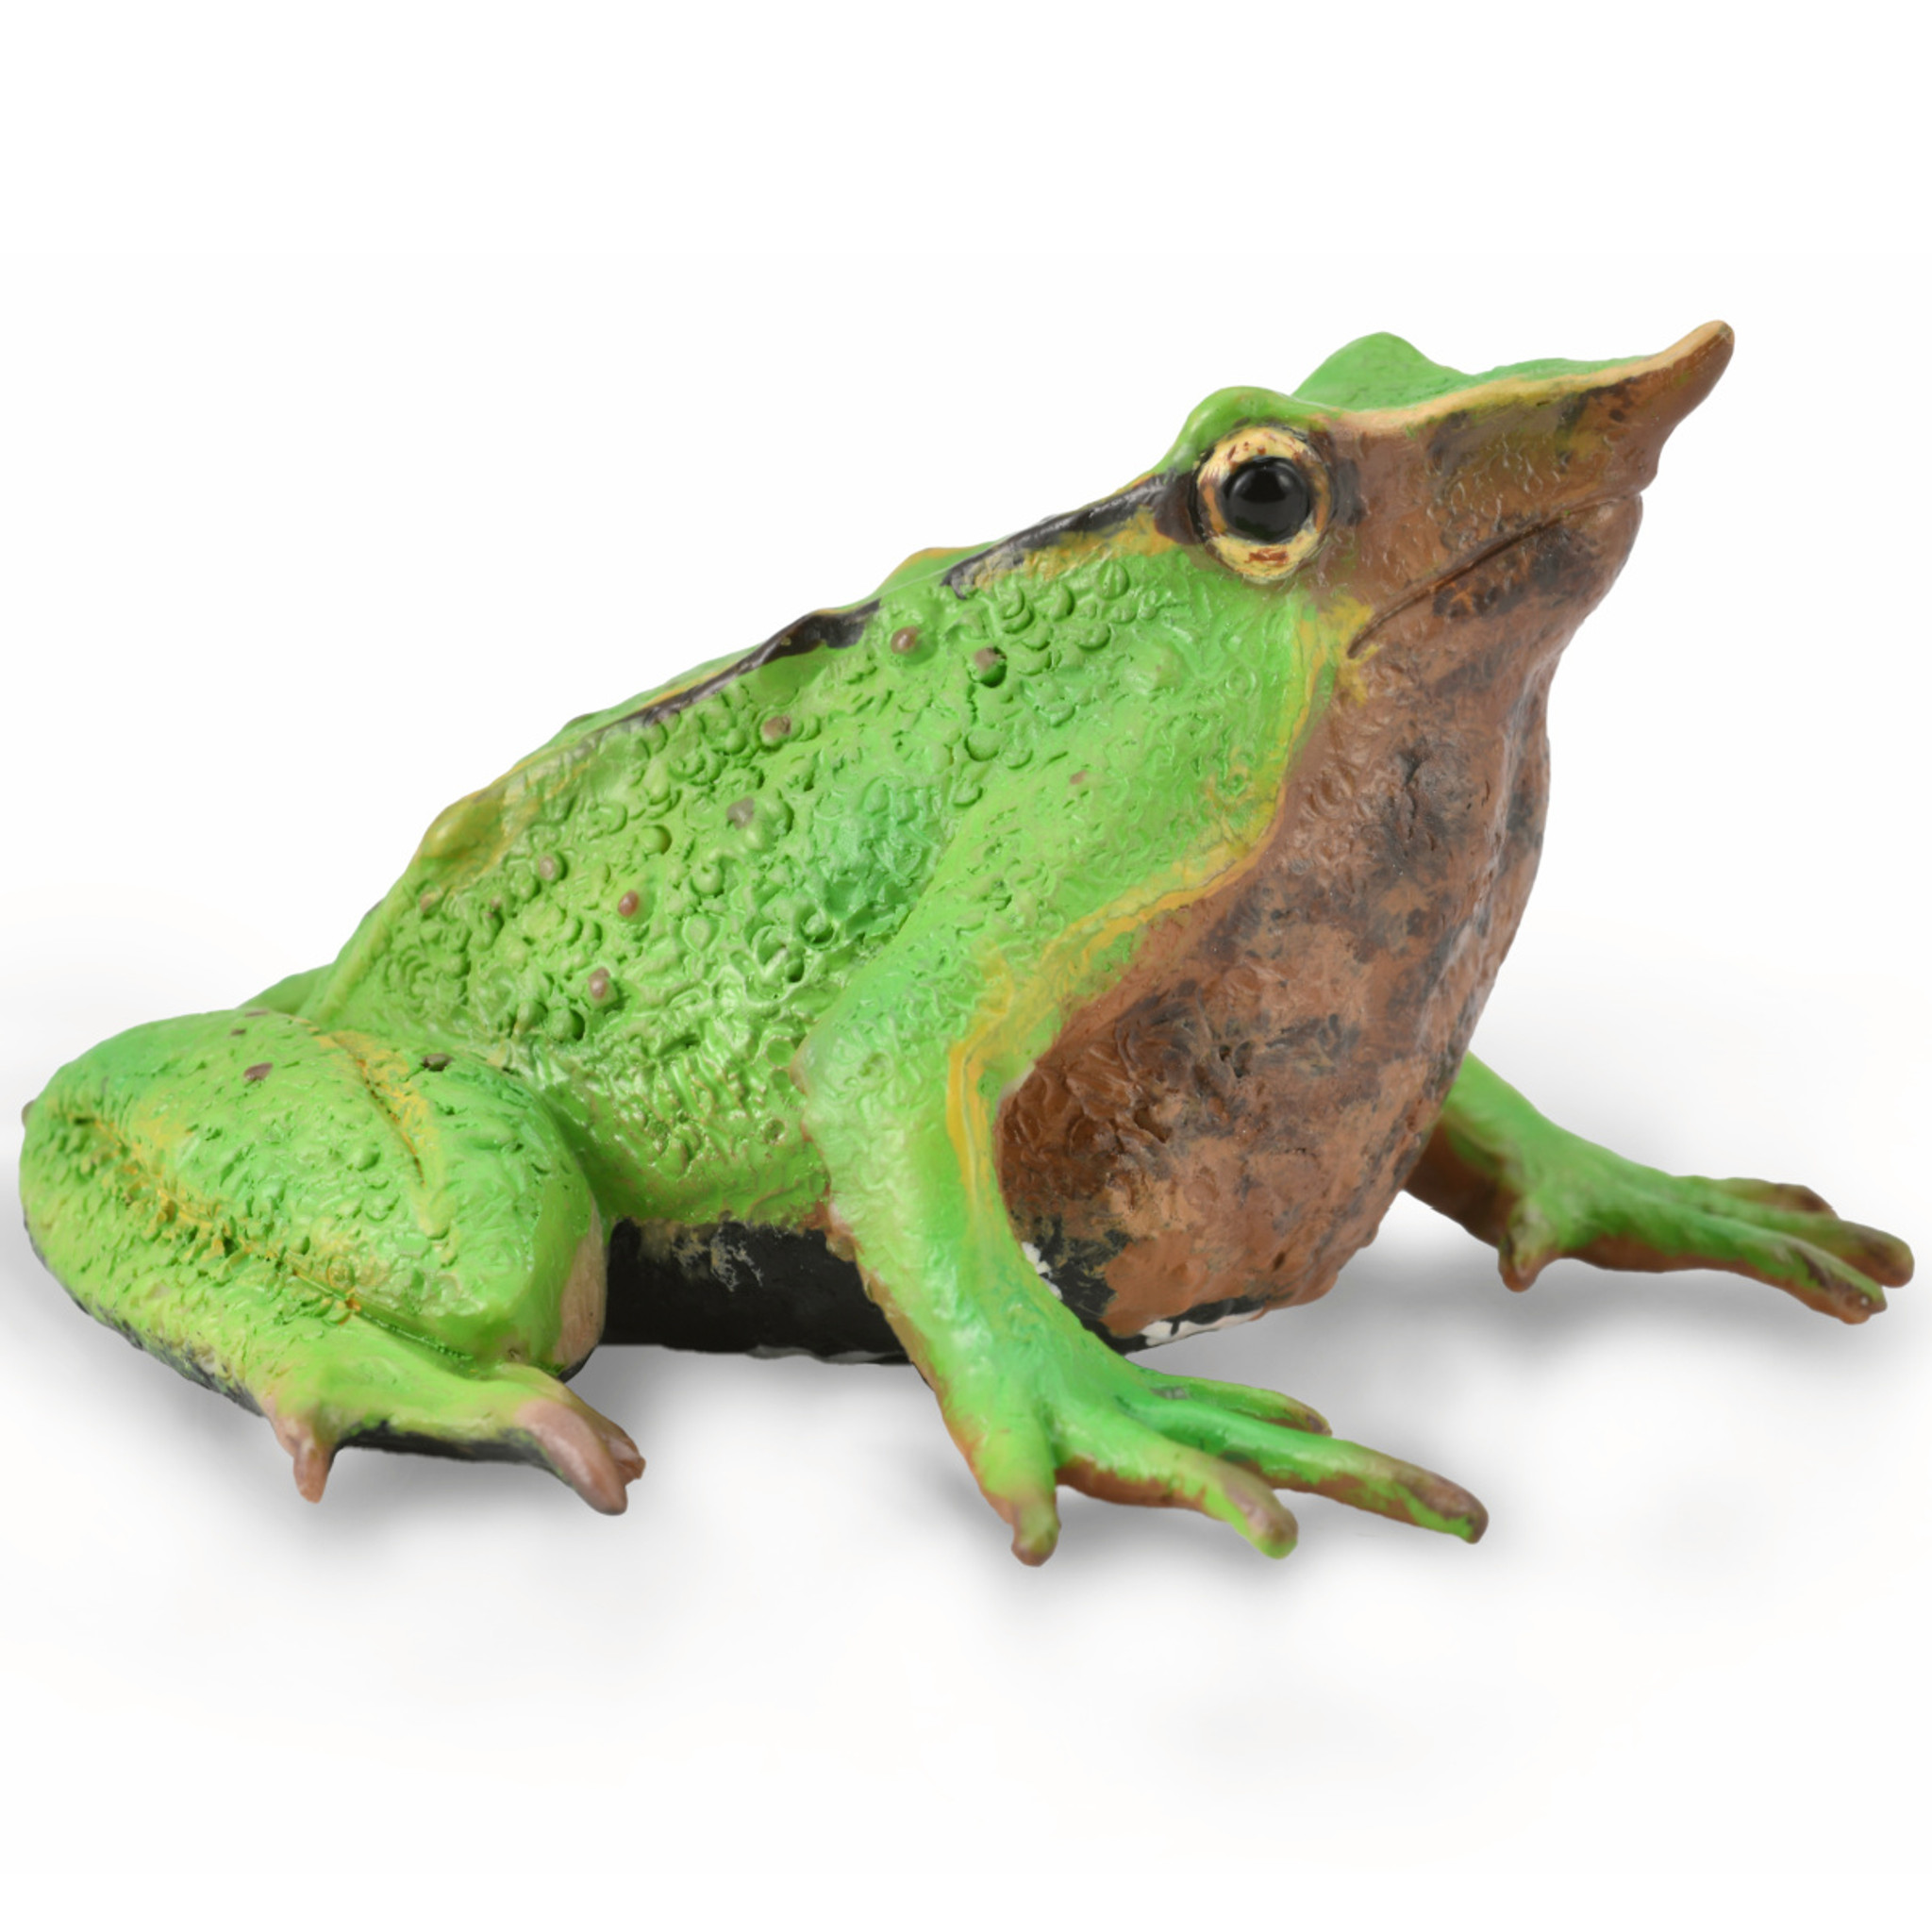 CollectA Darwin's Frog 88938 | MiniZoo Frog